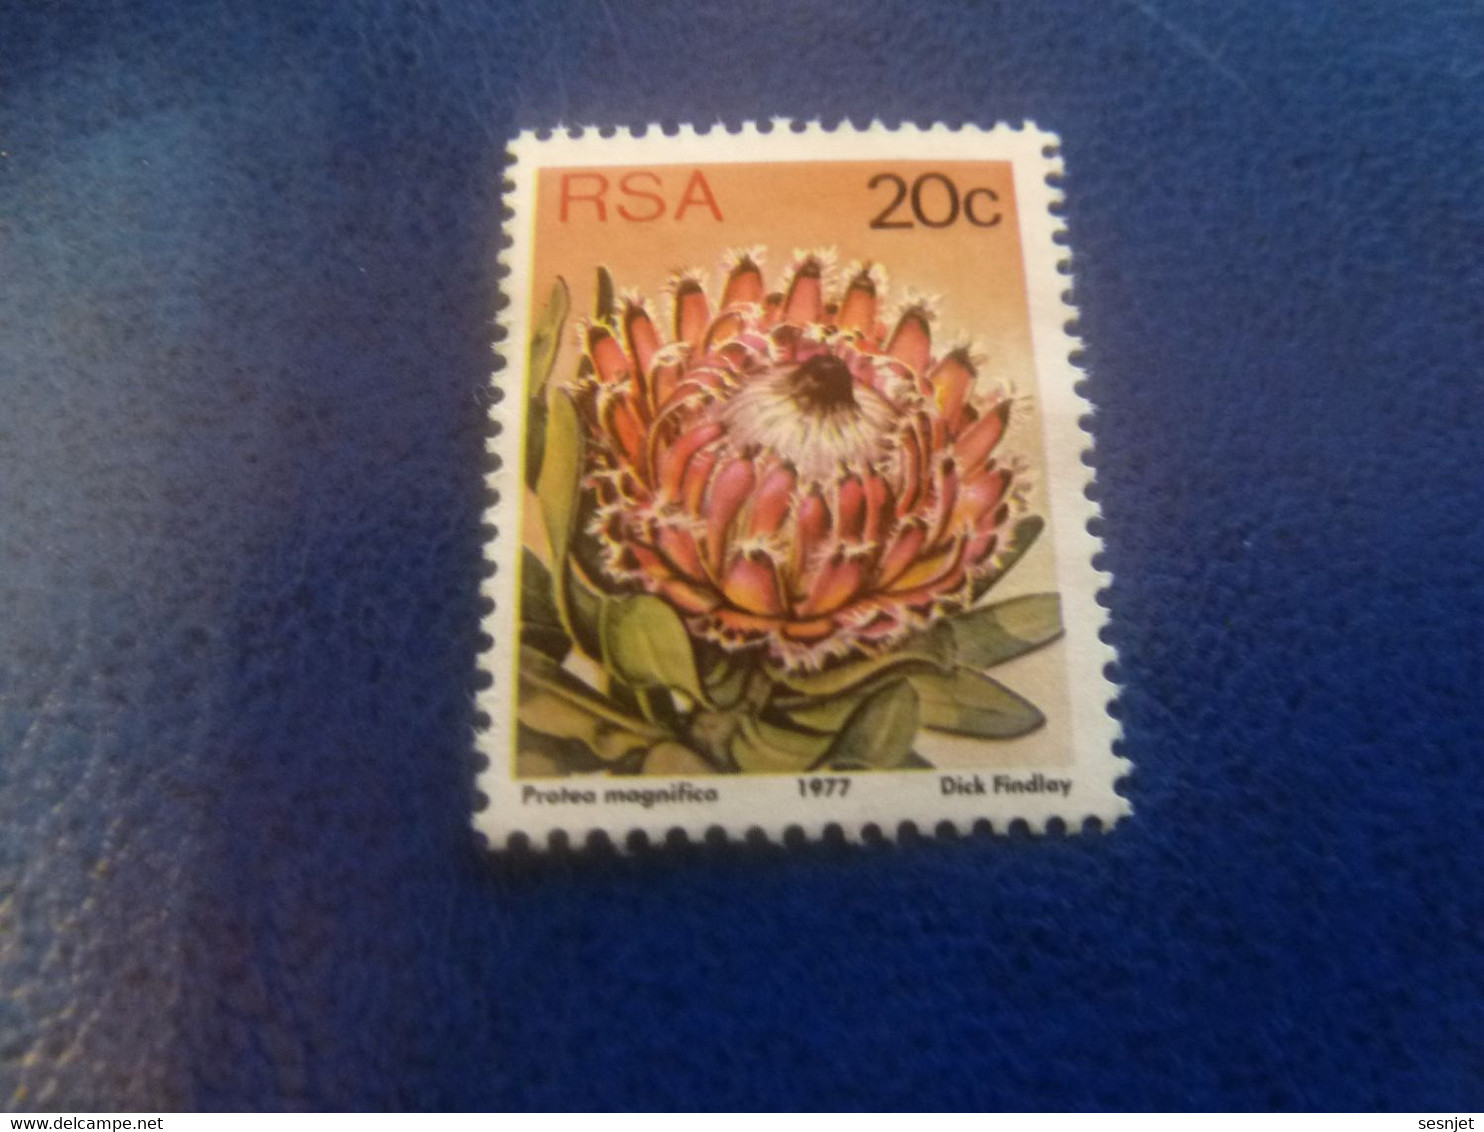 Rsa - Protea Punctata - Dick Findlay - 20 C. - Multicolore - Non Oblitéré - Année 1977 - - Usati